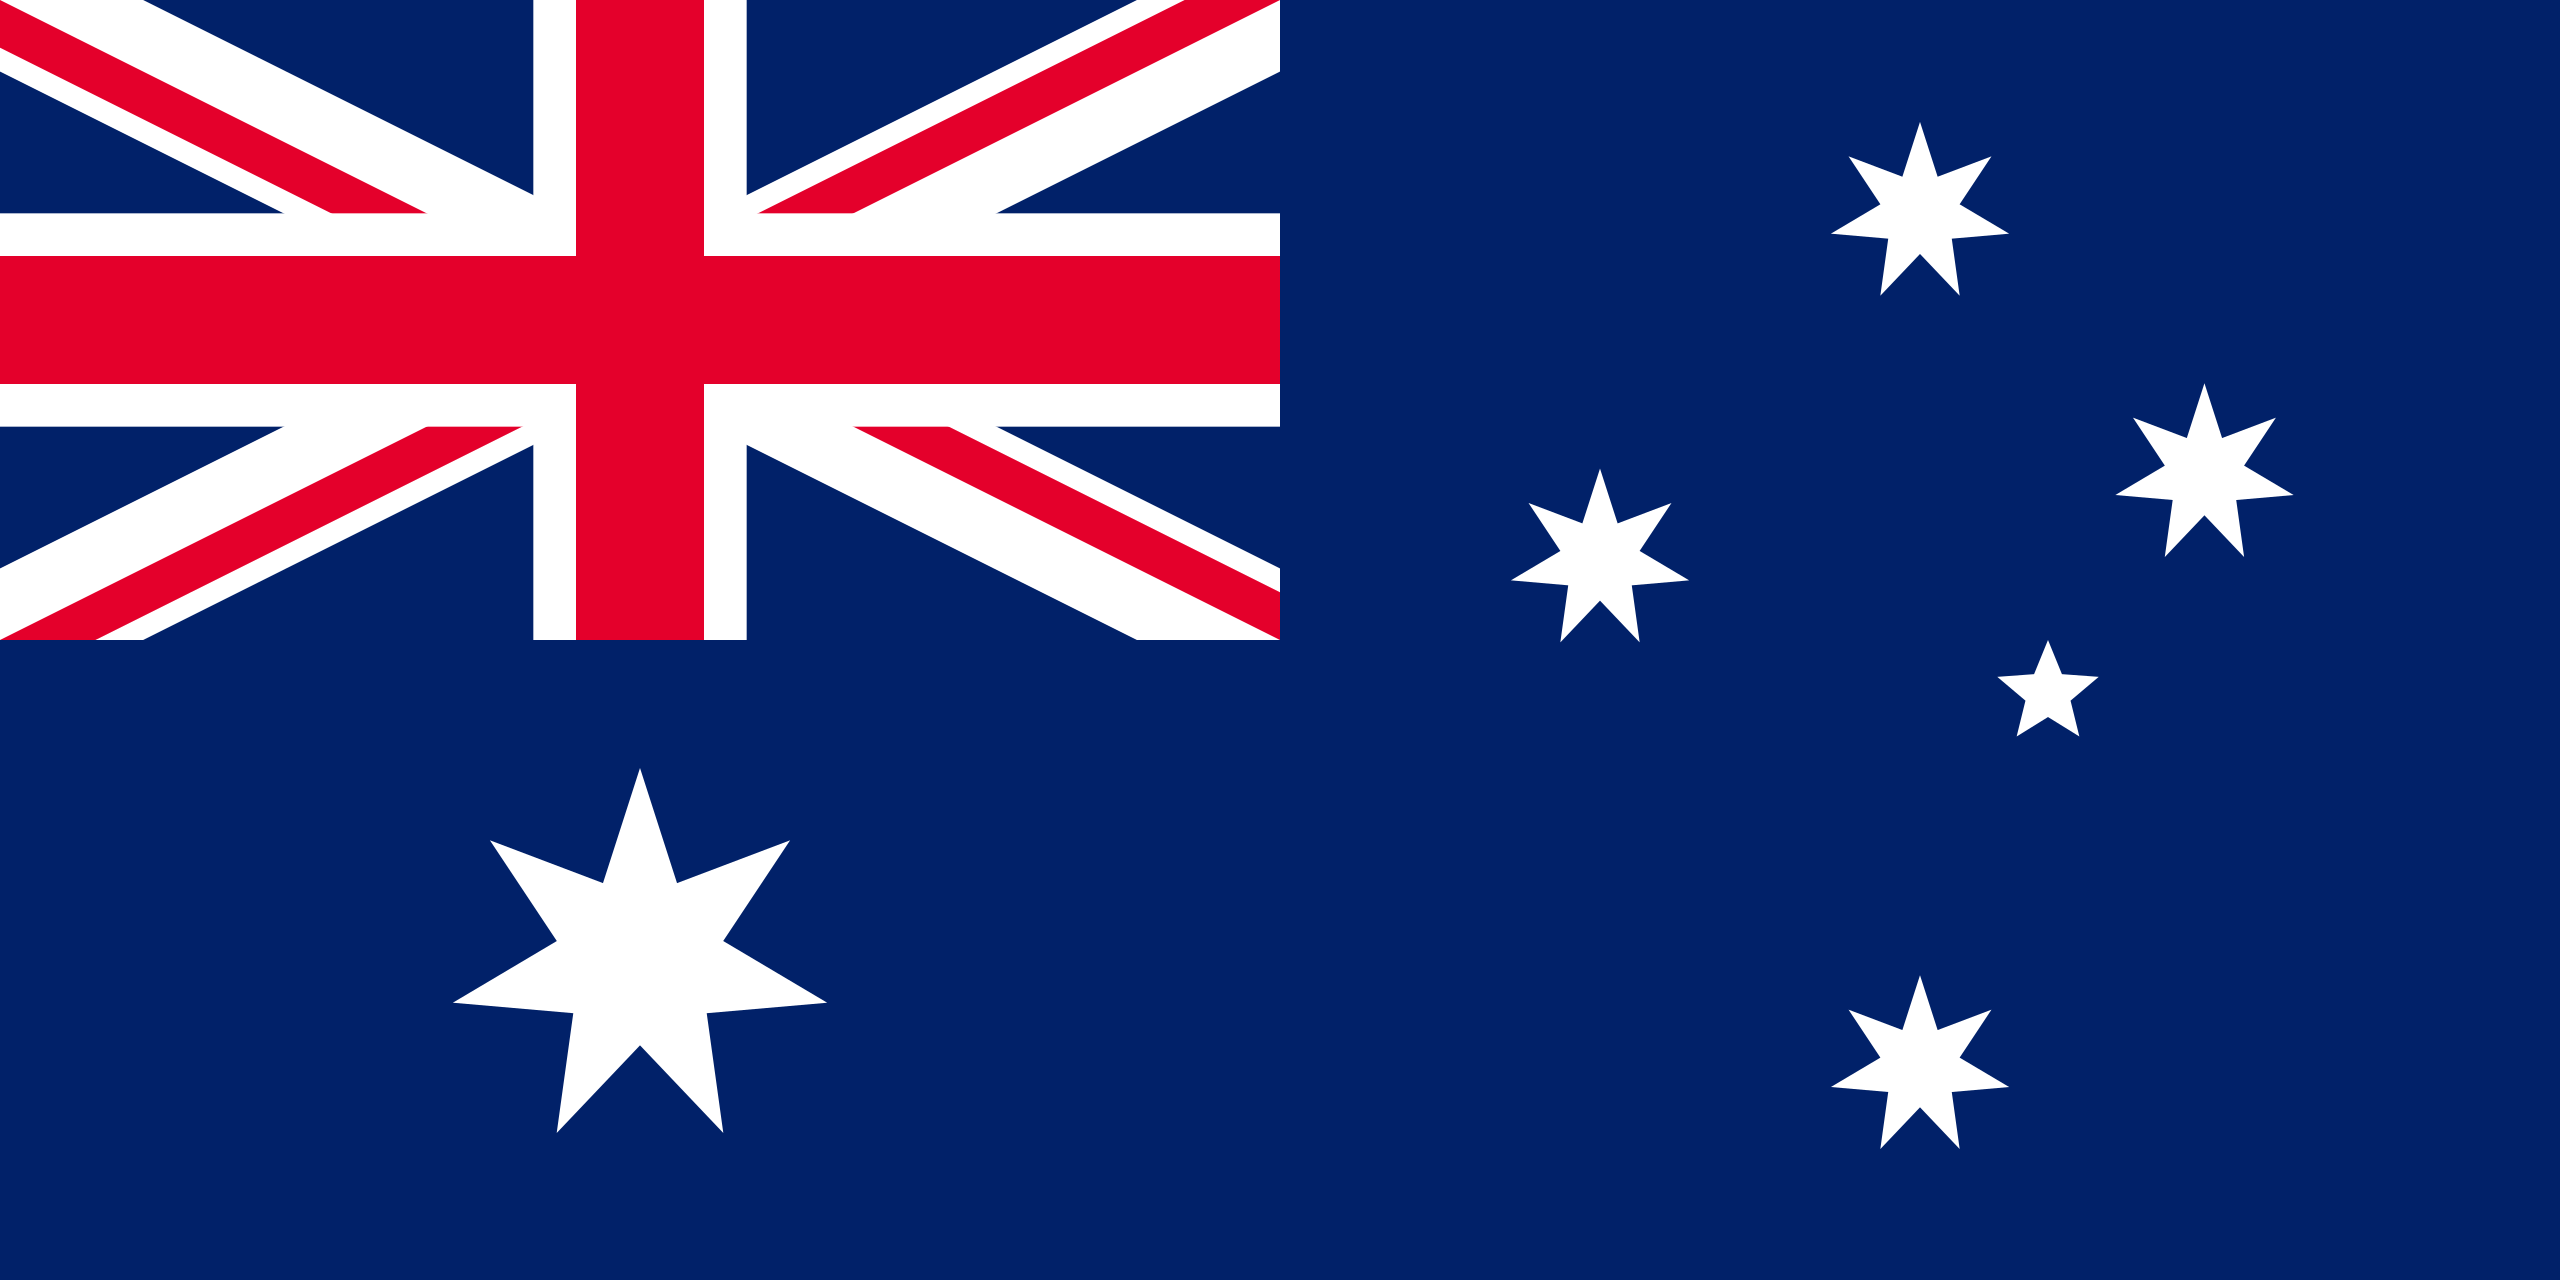 Flag of Commonwealth of Australia